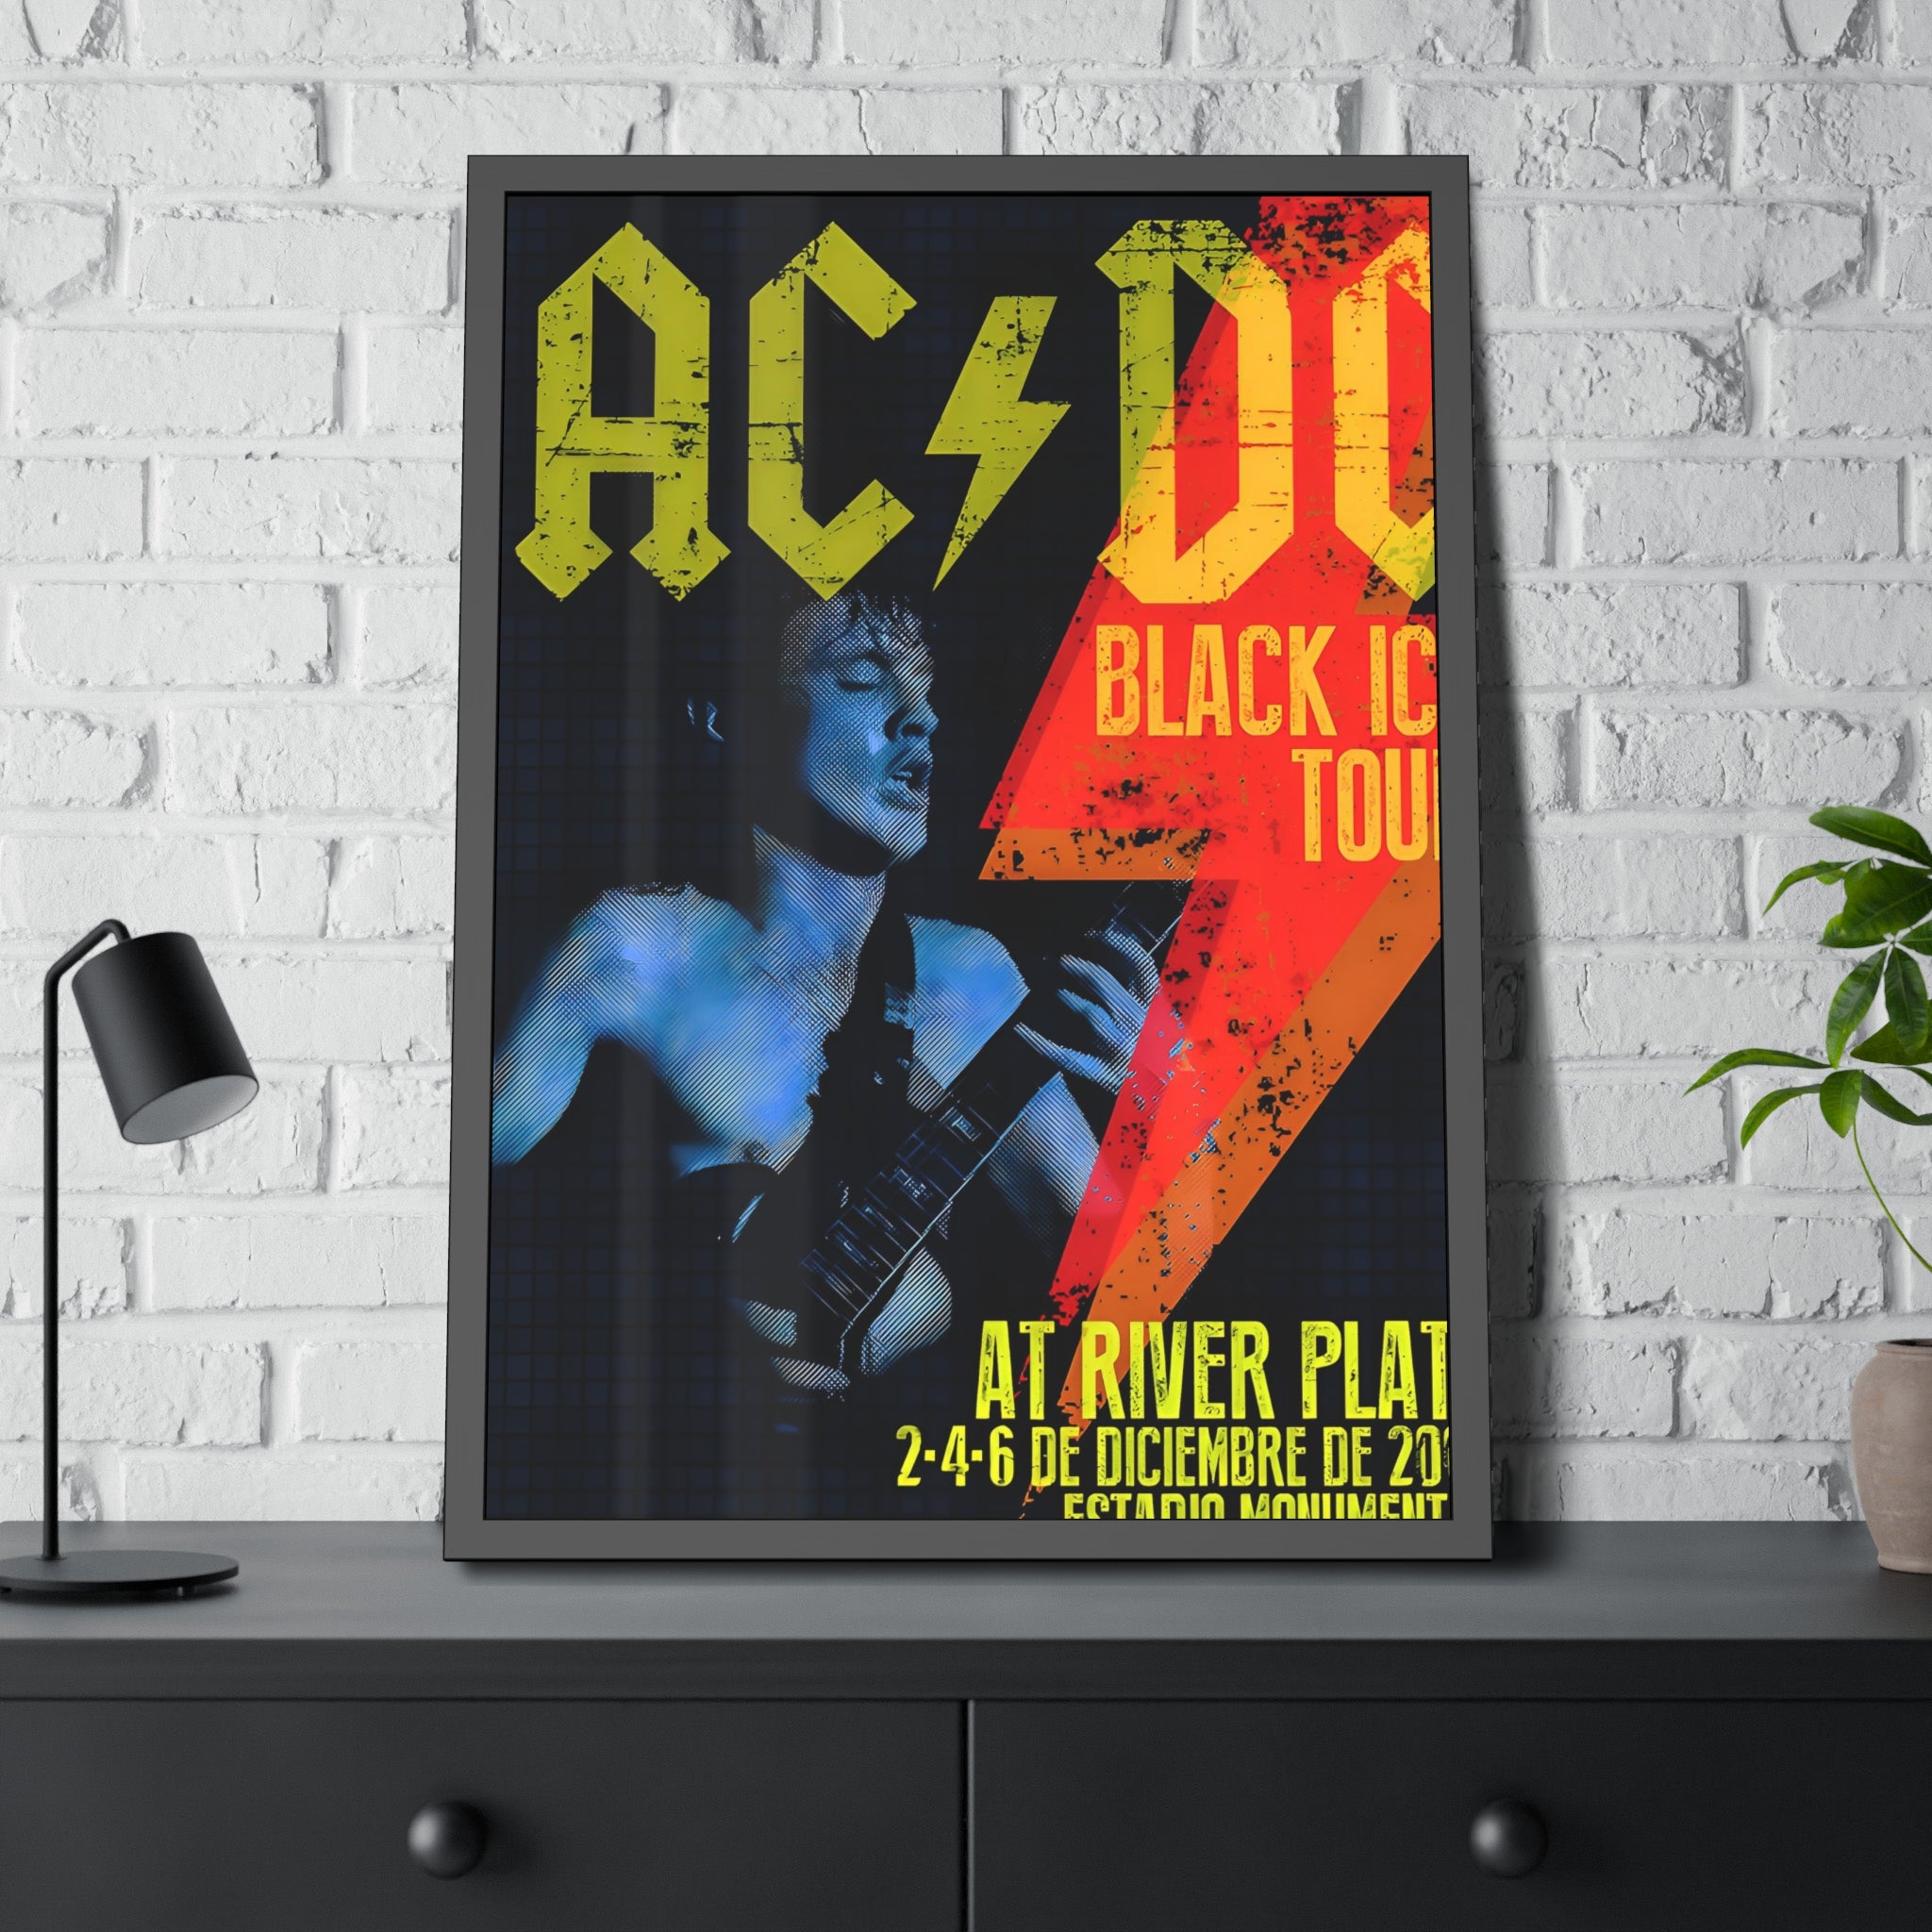 ACDC Black Ice Tour Concert Poster